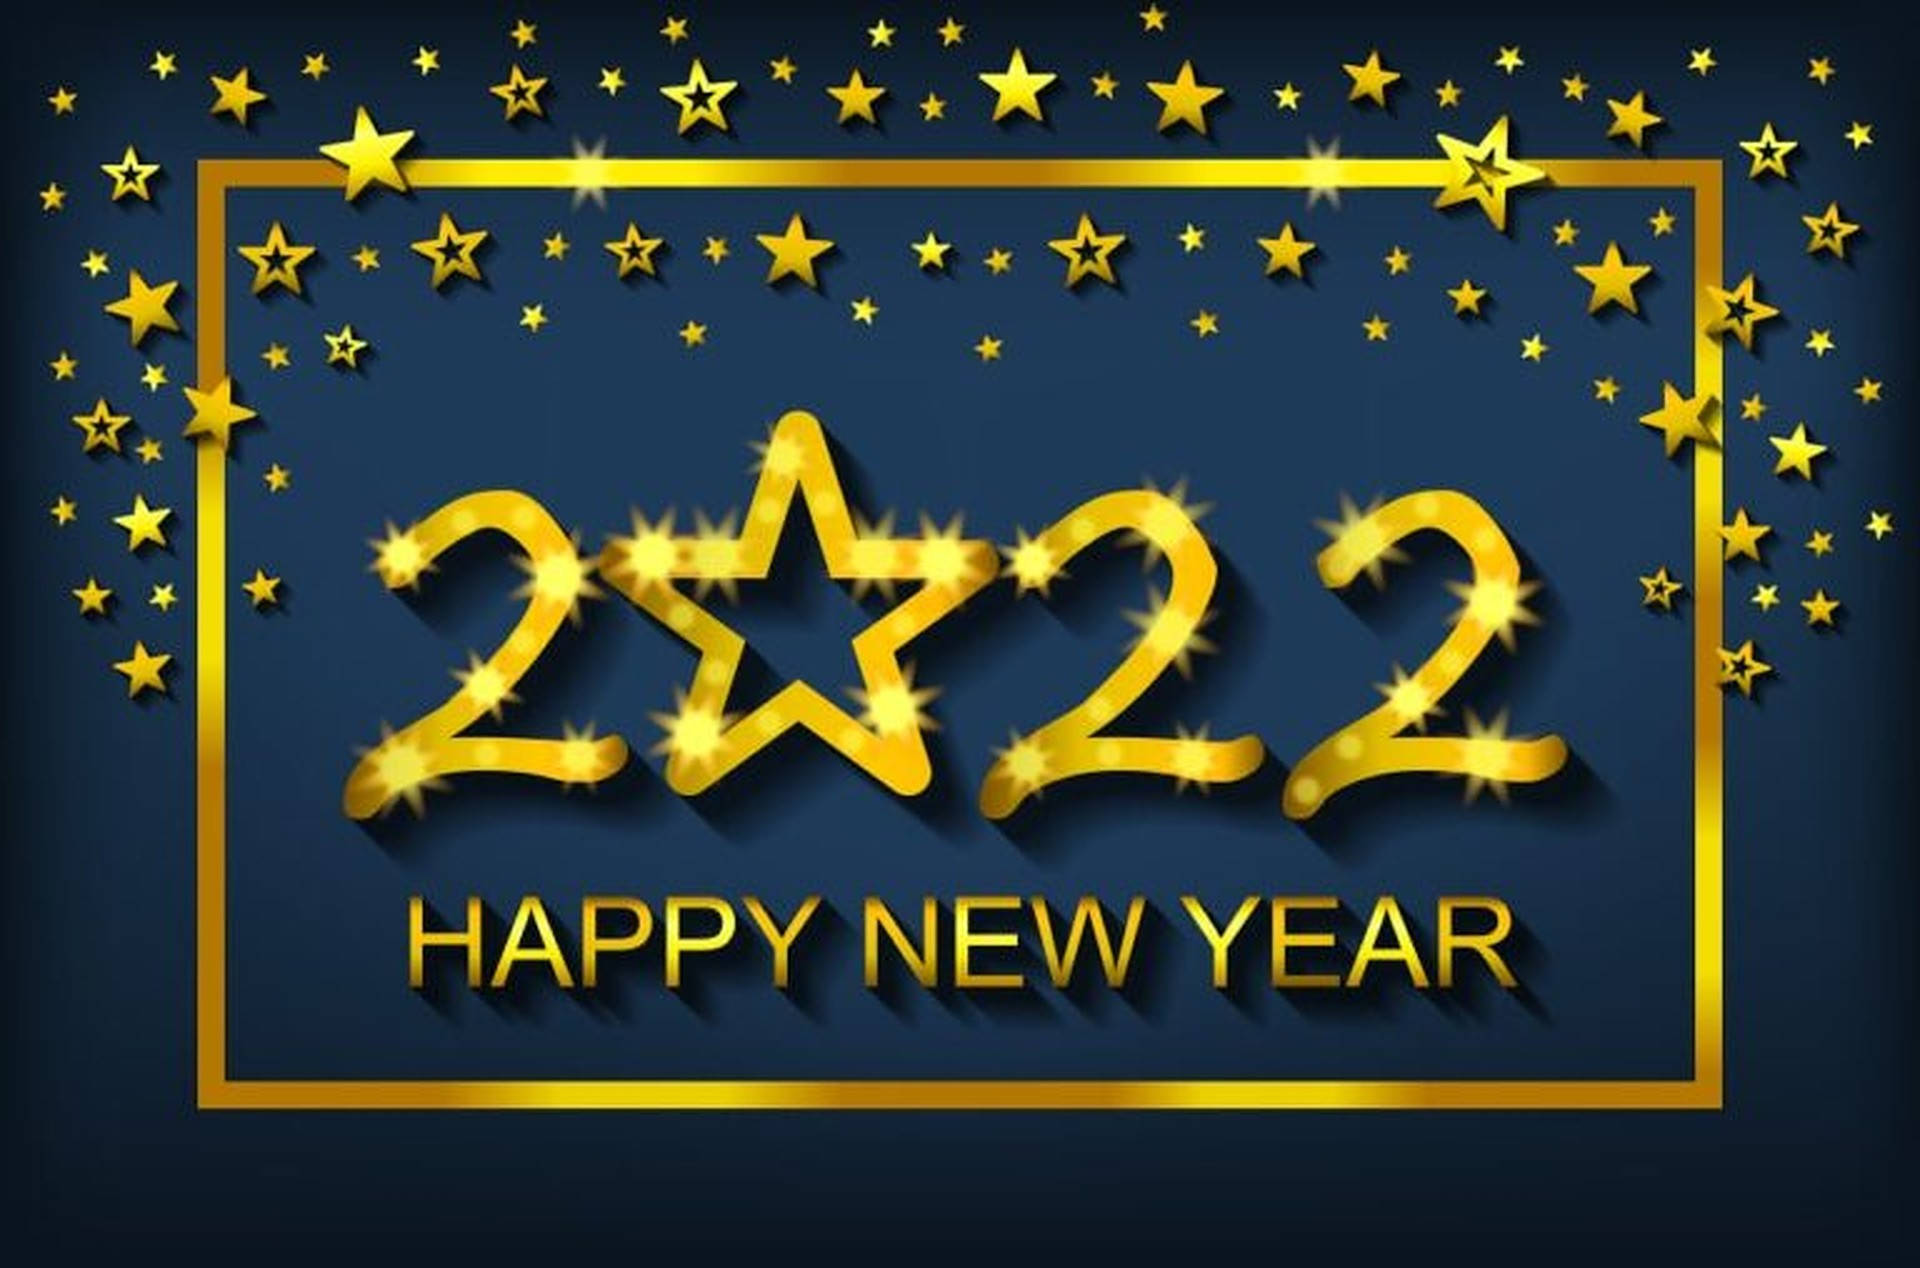 Golden Star Happy New Year 2022 Background